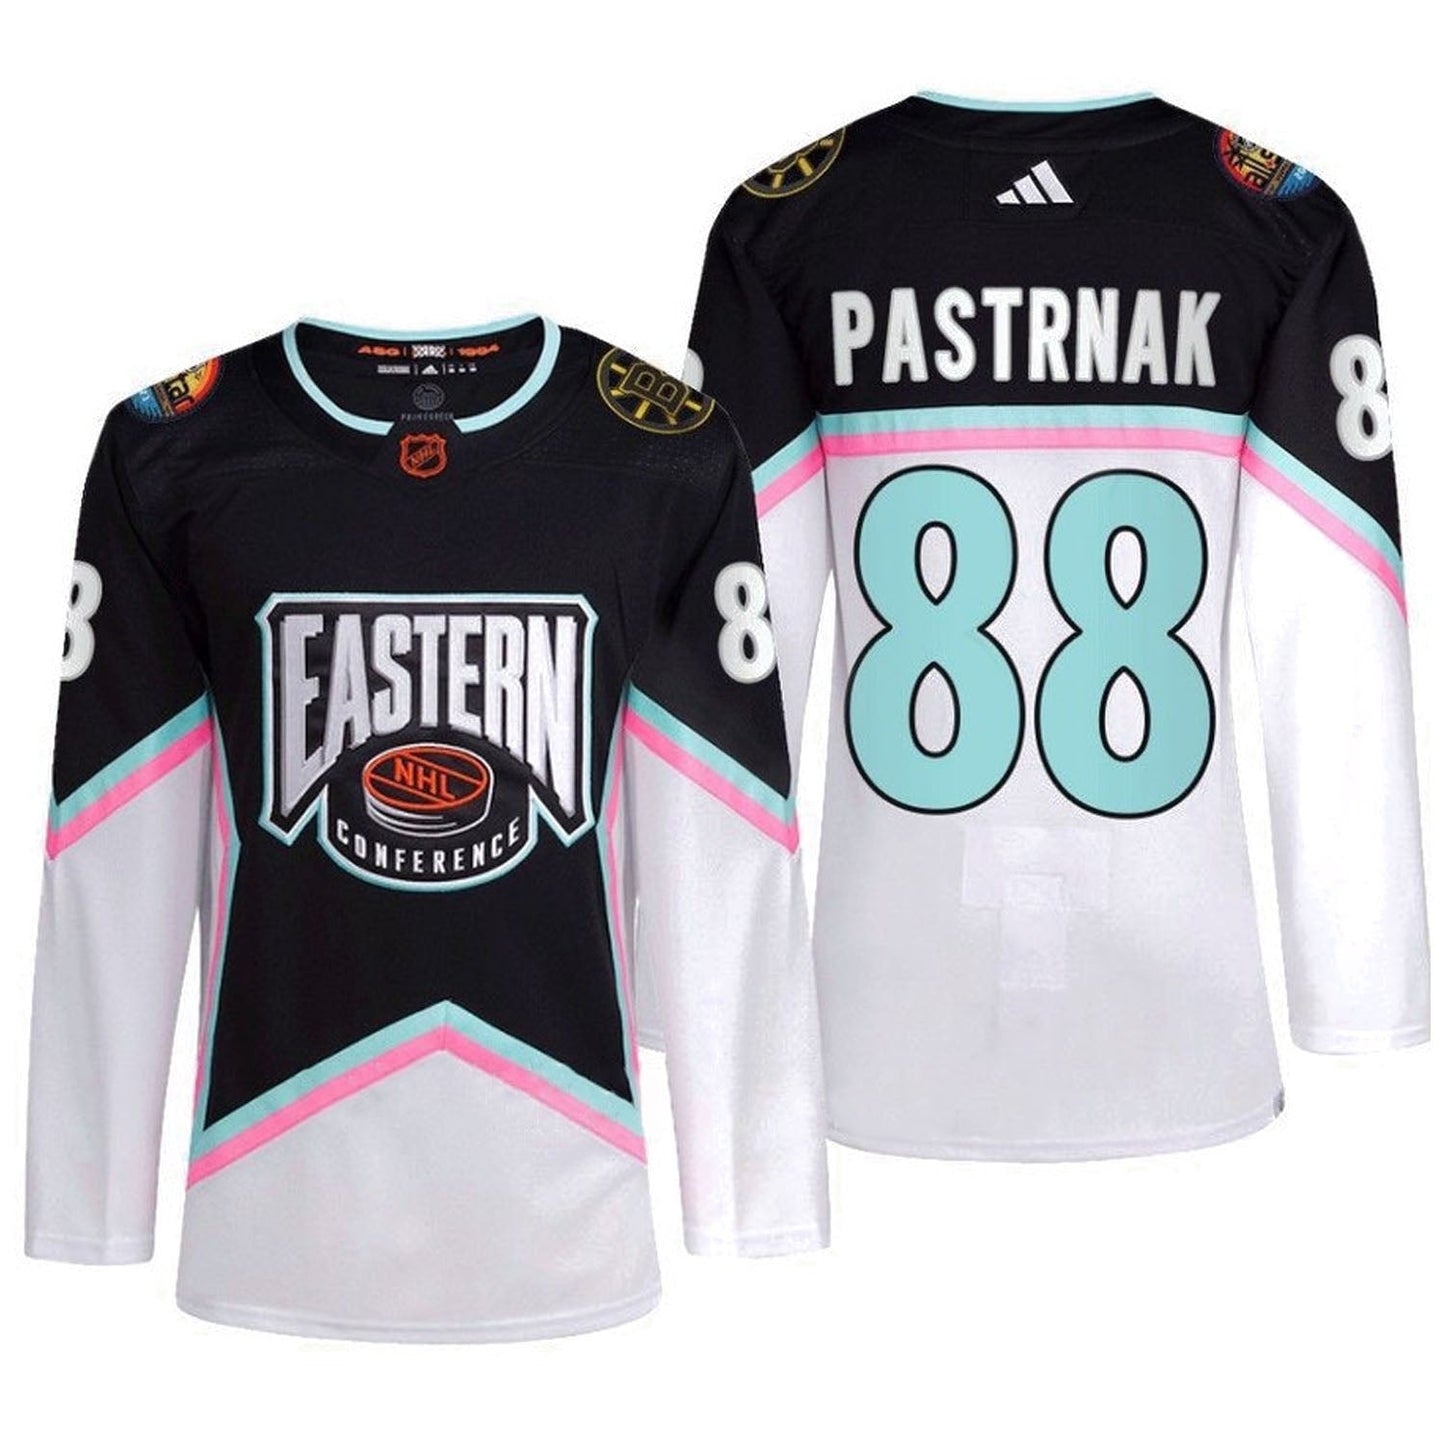 NHL David Pastrnak Eastern All Star 88 Jersey